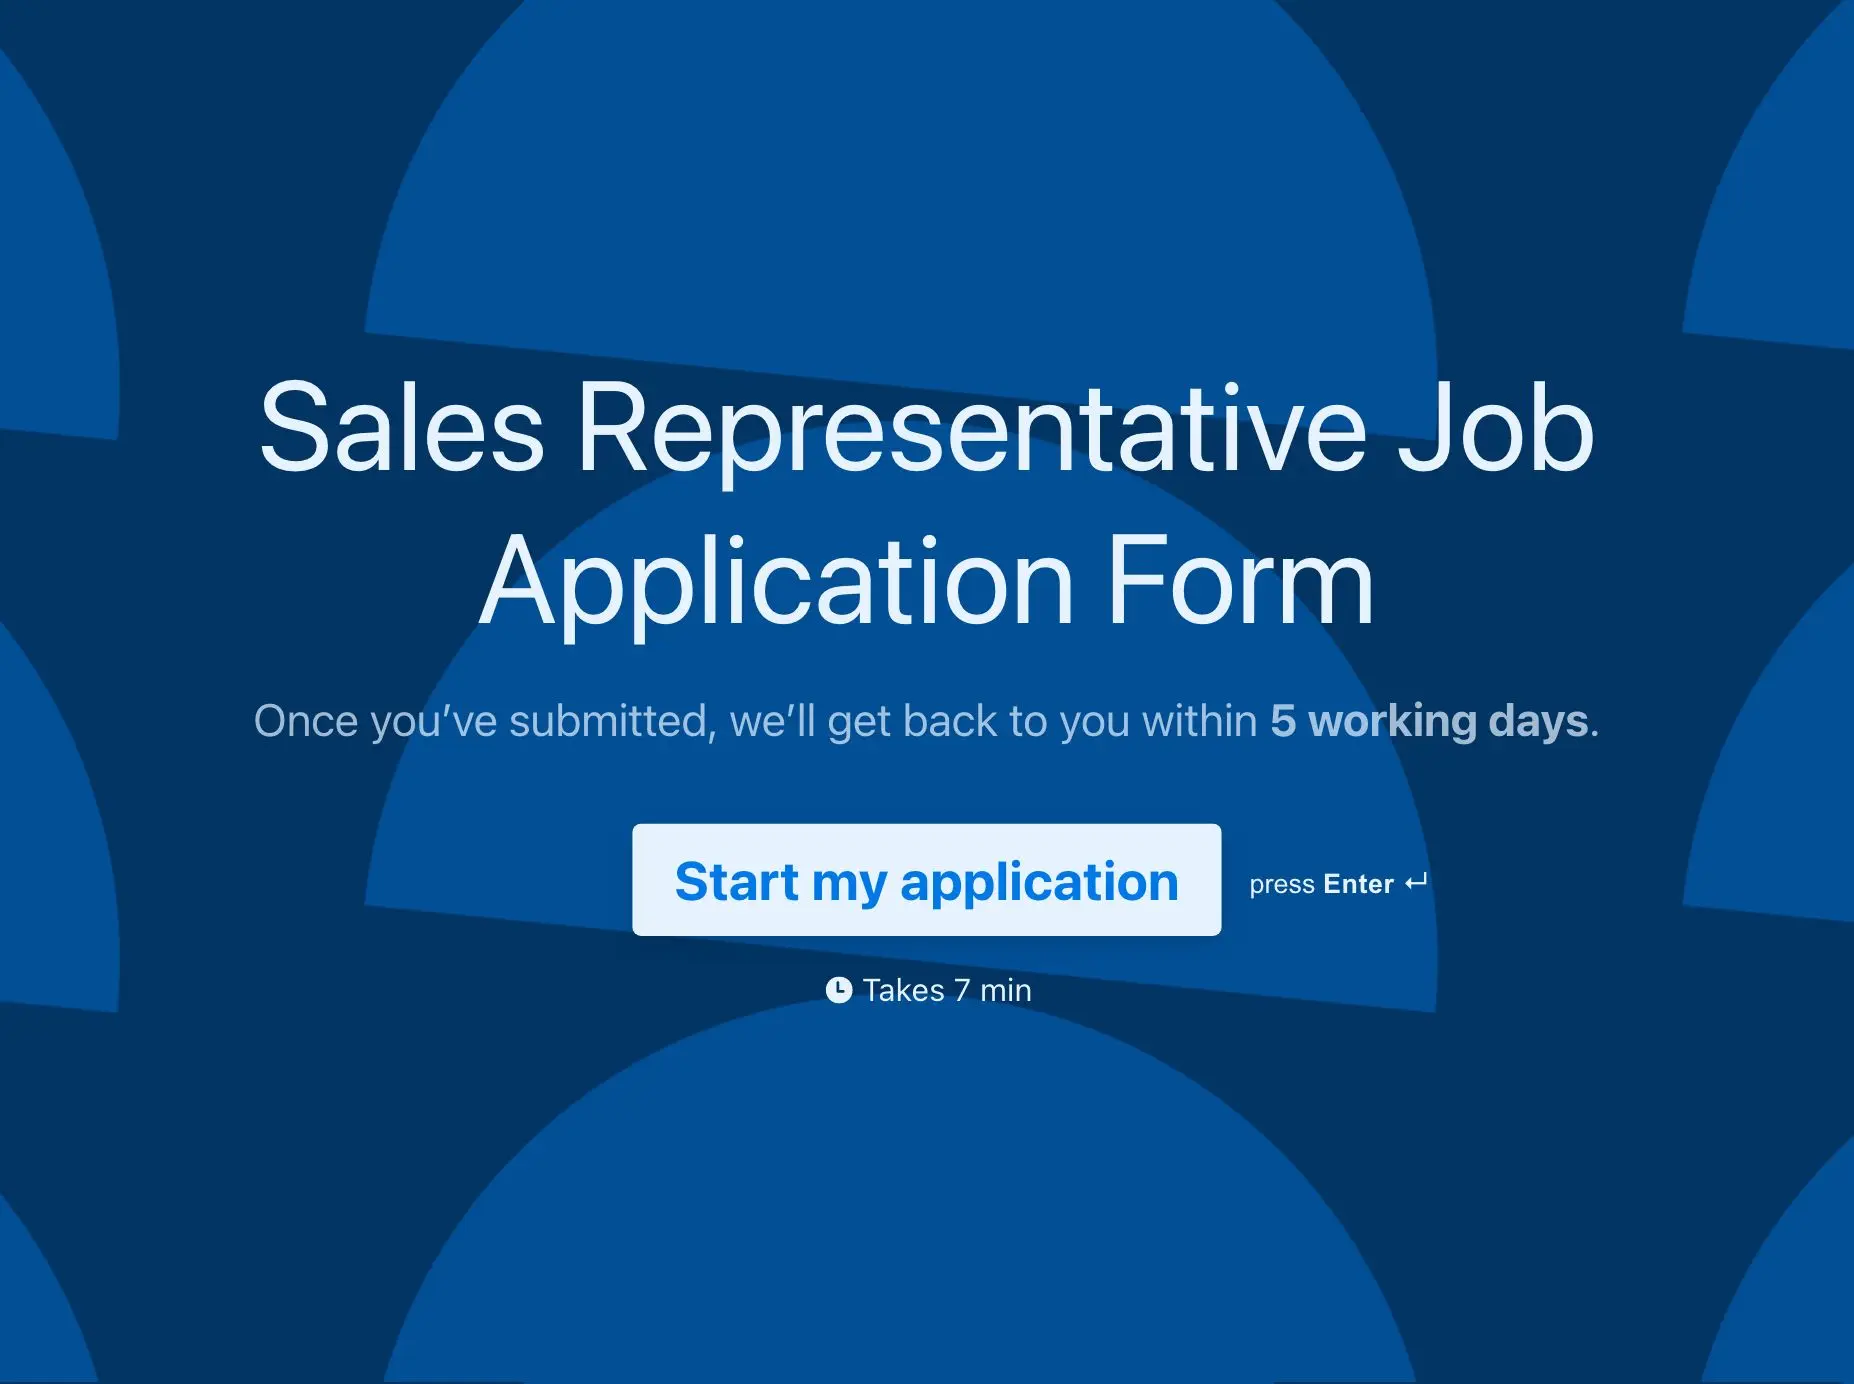 Sales Representative Job Application Form Template Hero